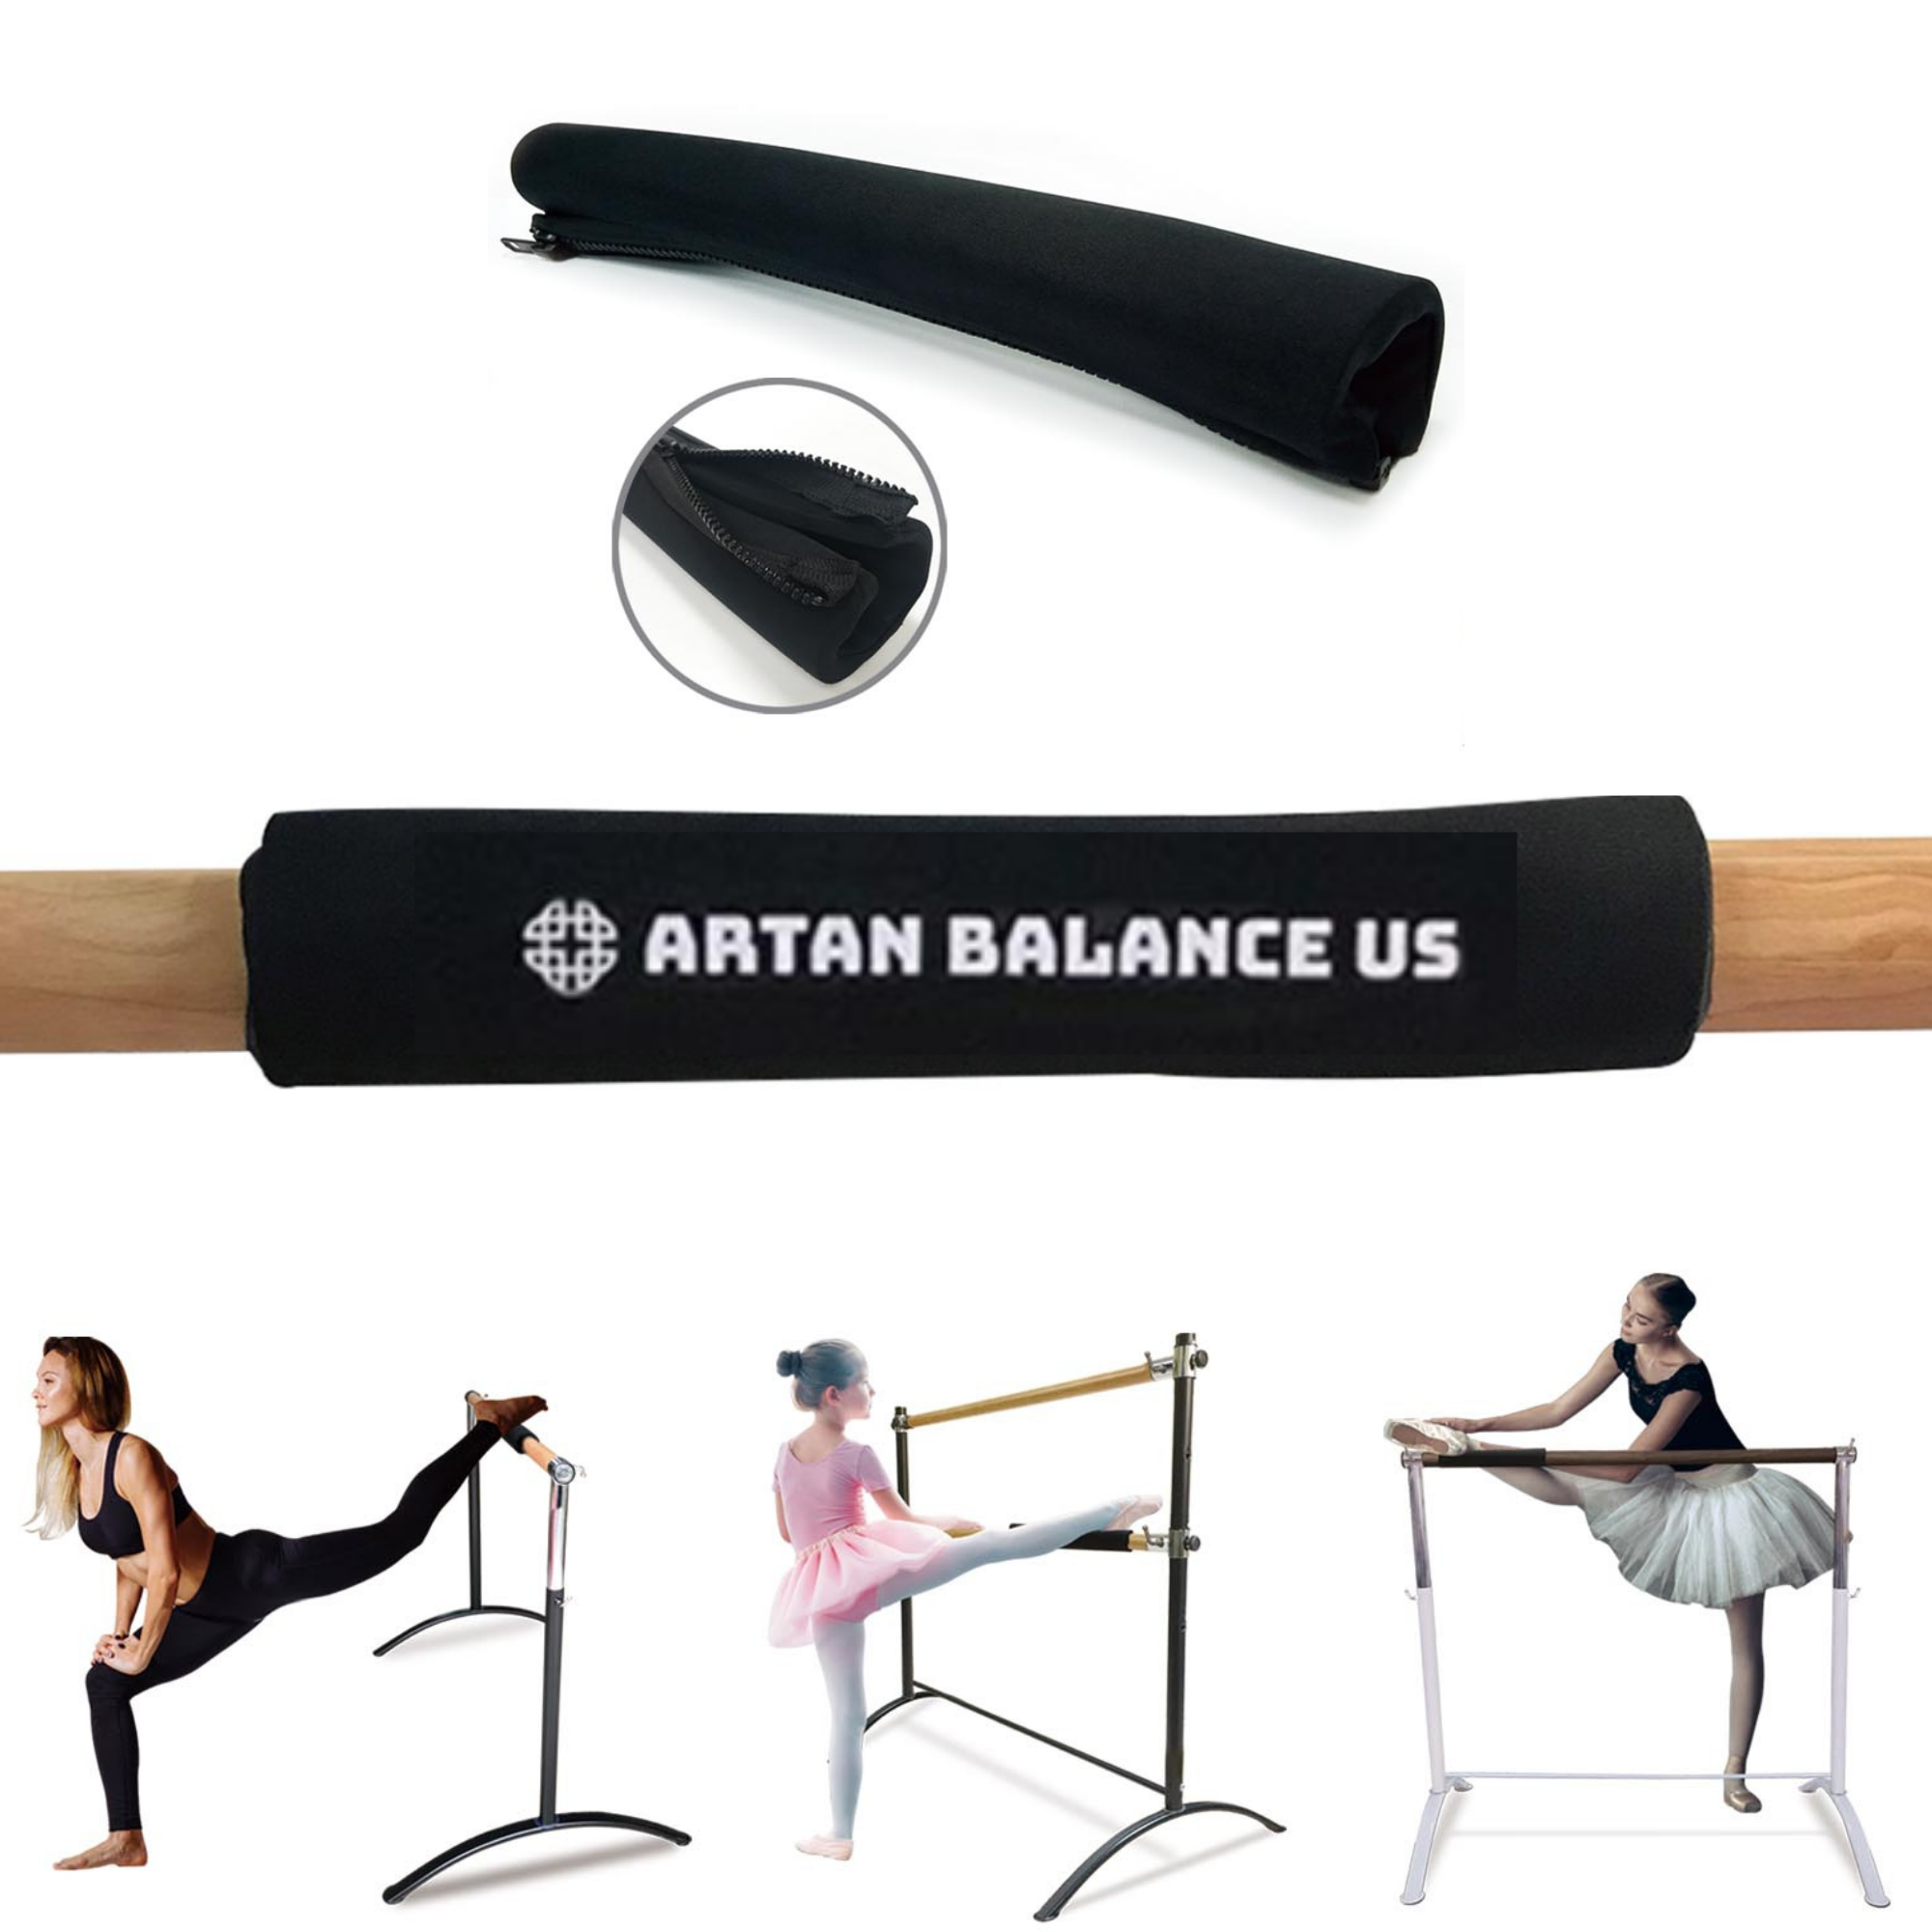 ArtAn Balance - Ballet Barres and more (artanbalance) - Profile